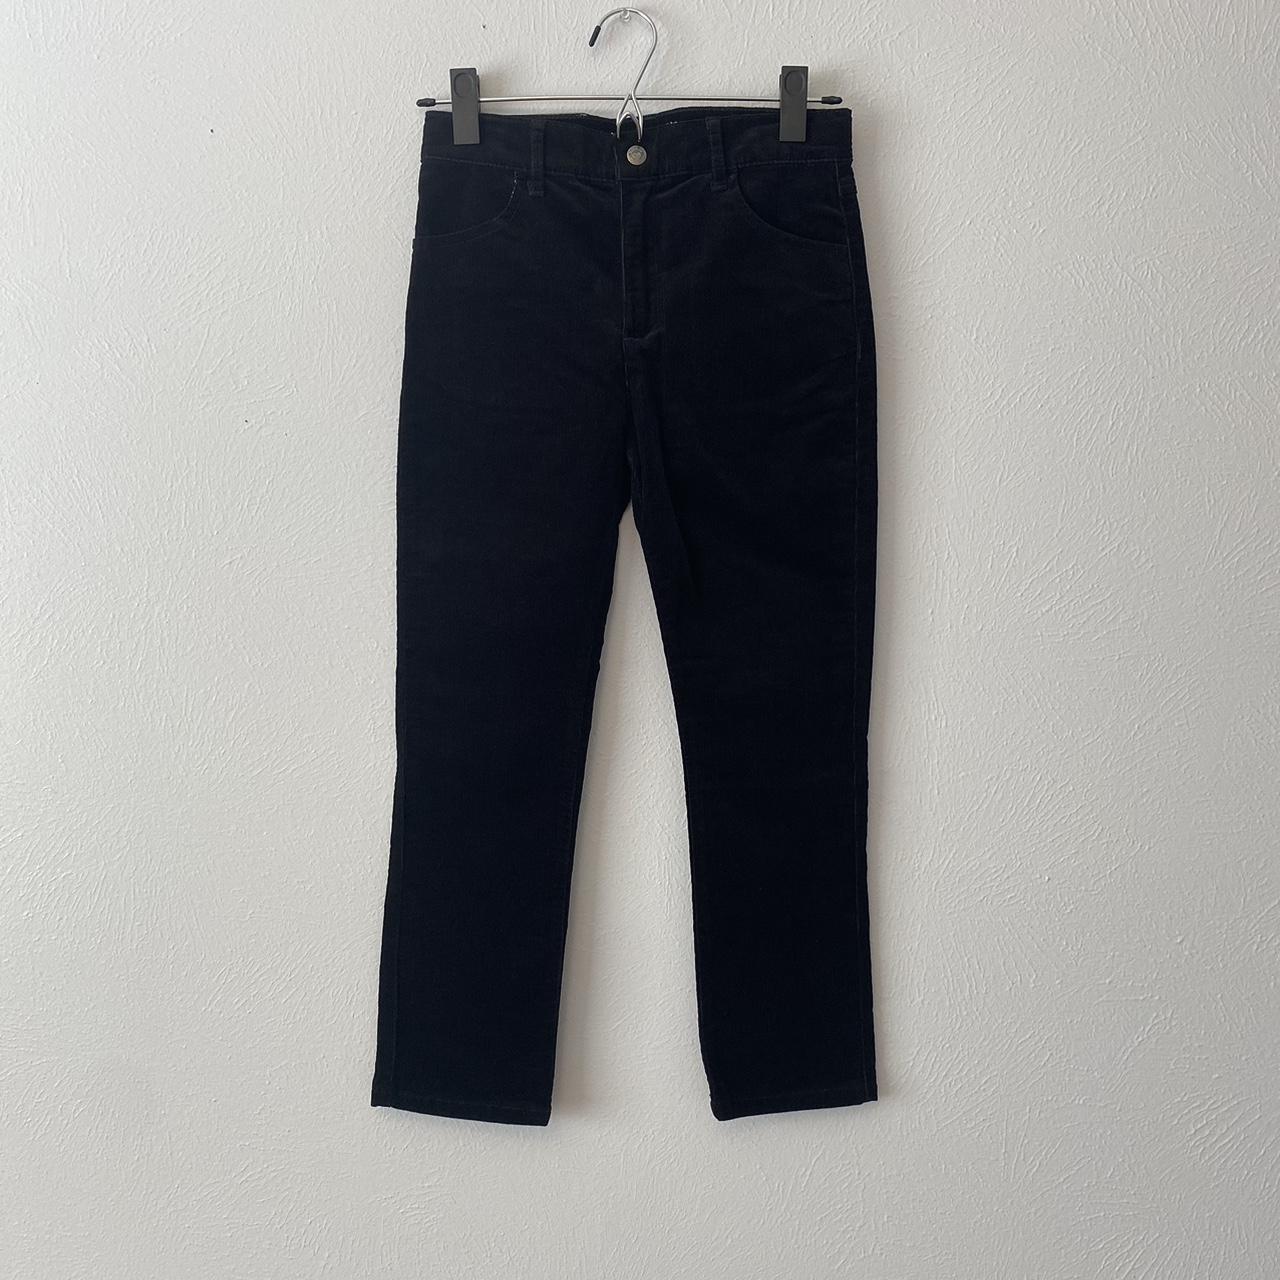 Ages 9-16 Boys Skinny Trousers School Slim Fit Black Grey Short Regular  Long Leg | eBay